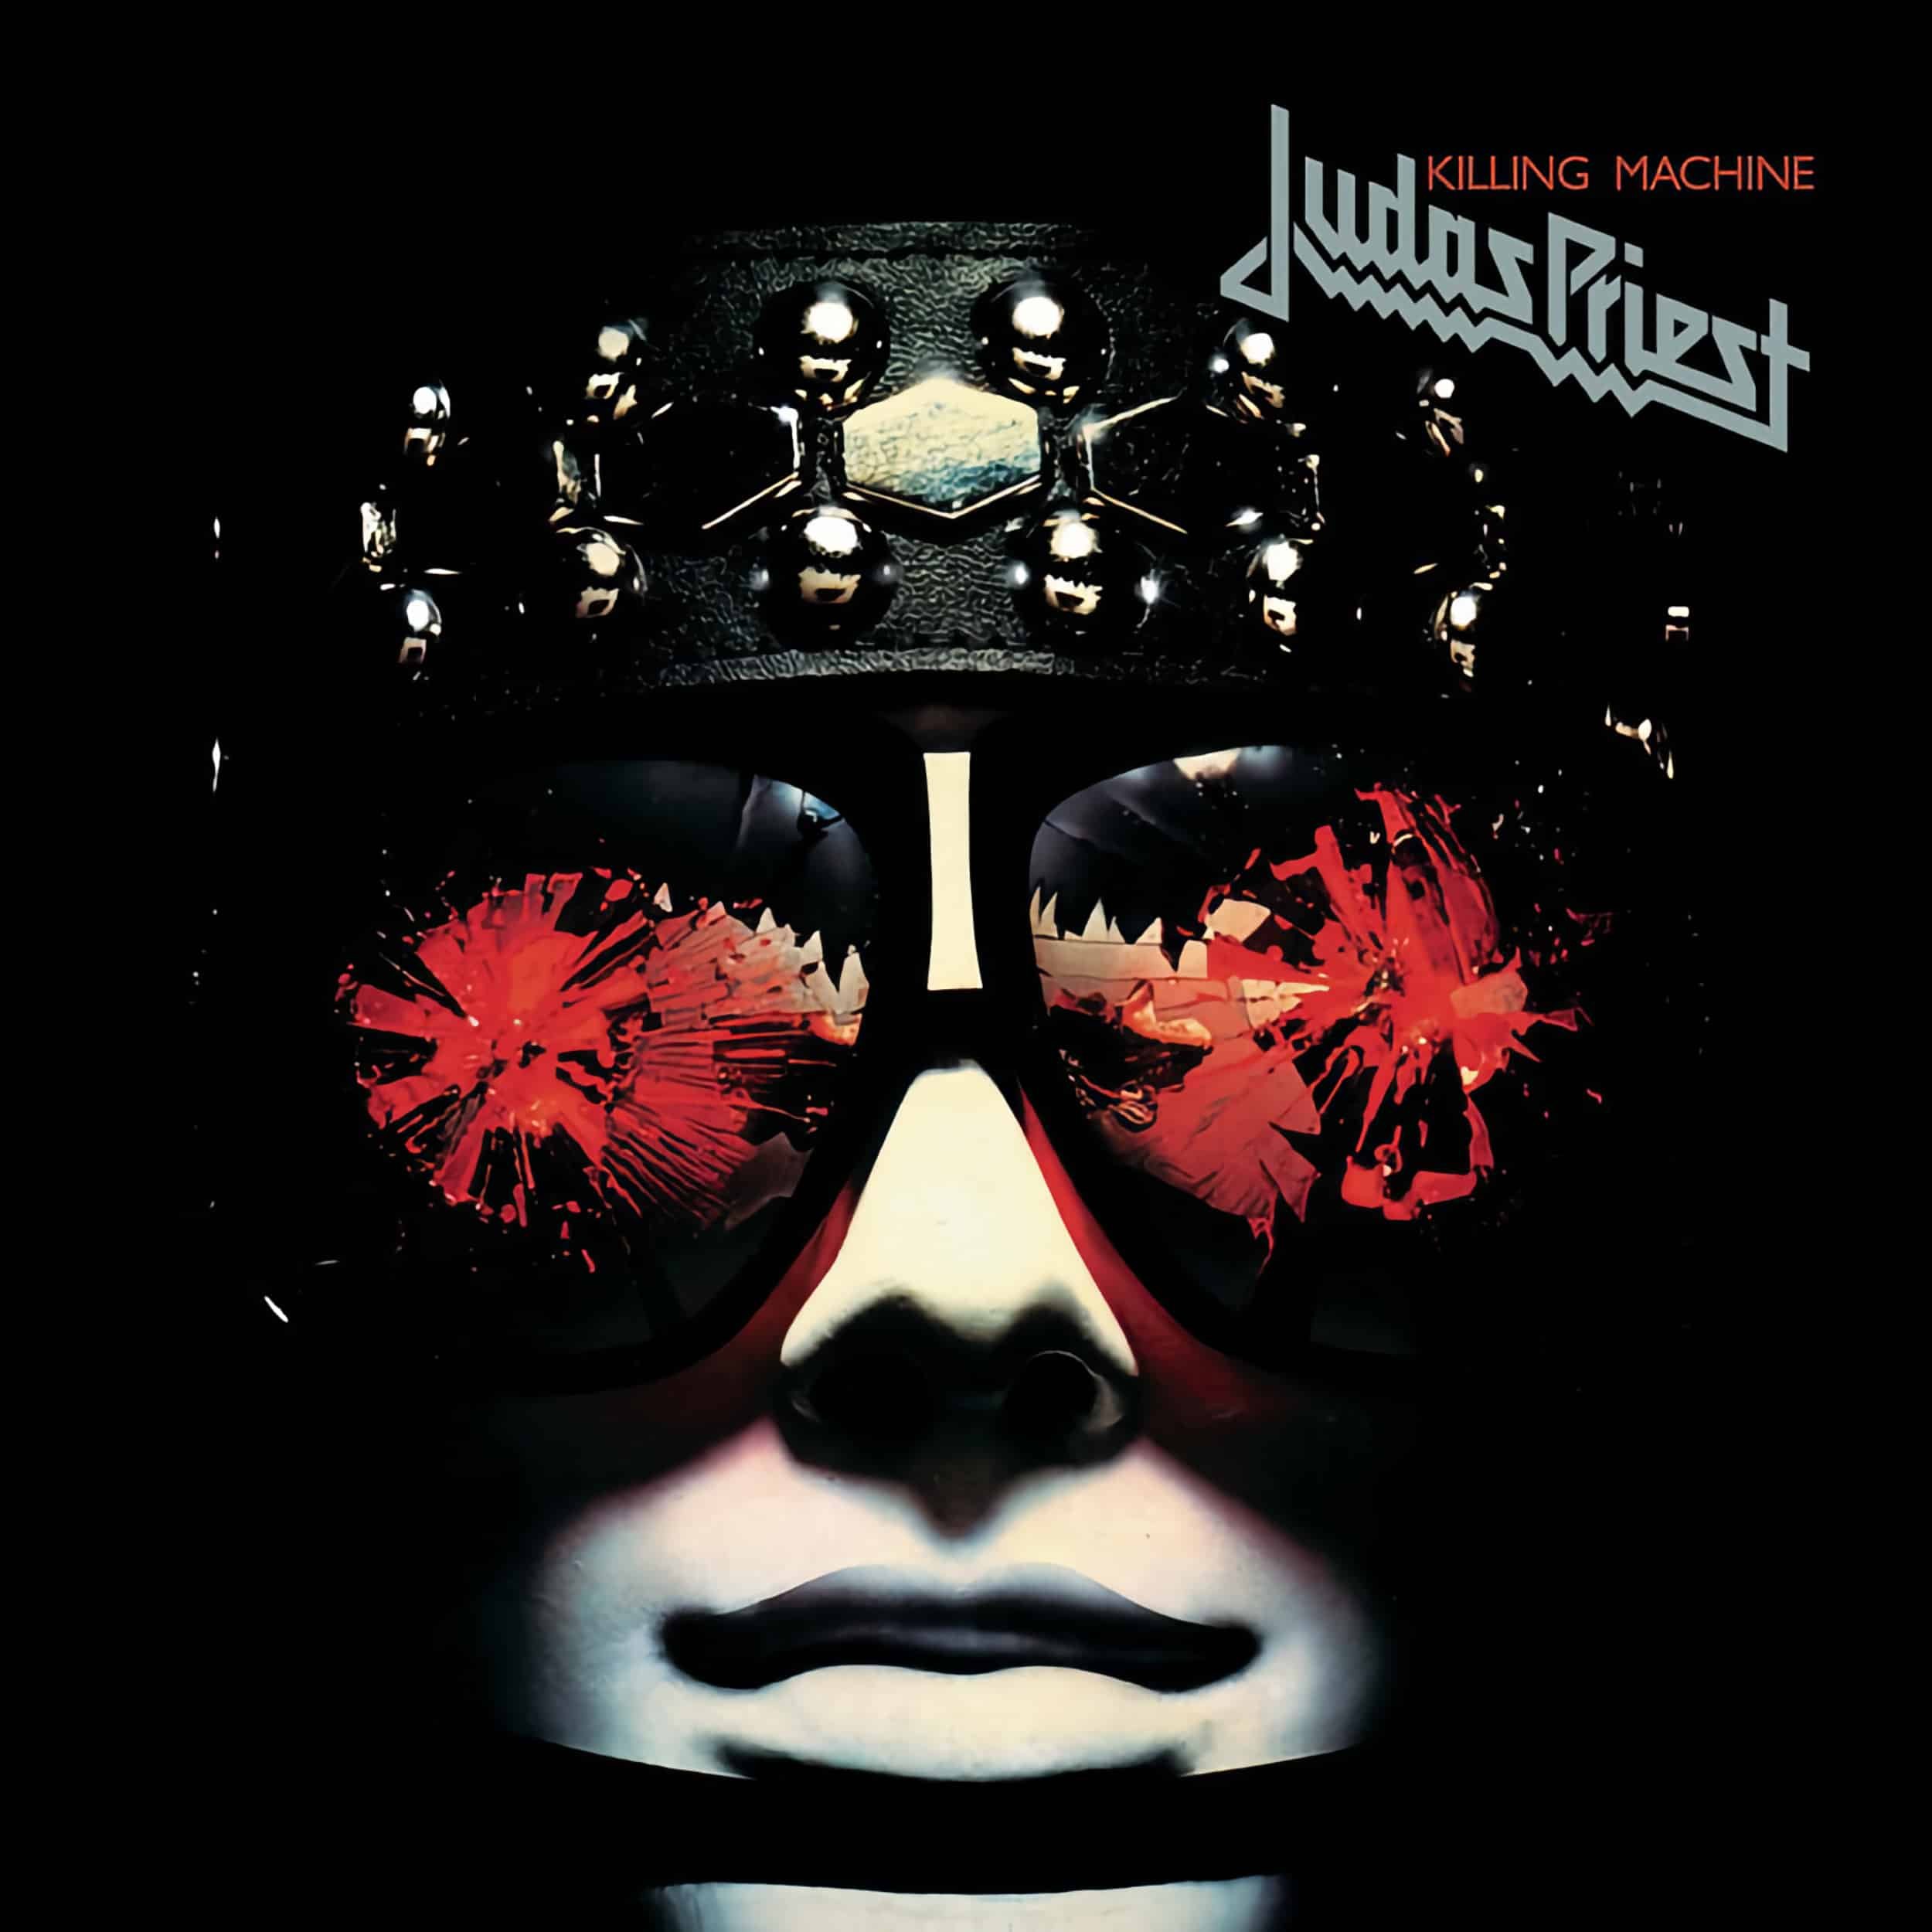 Judas Priest – Killing Machine